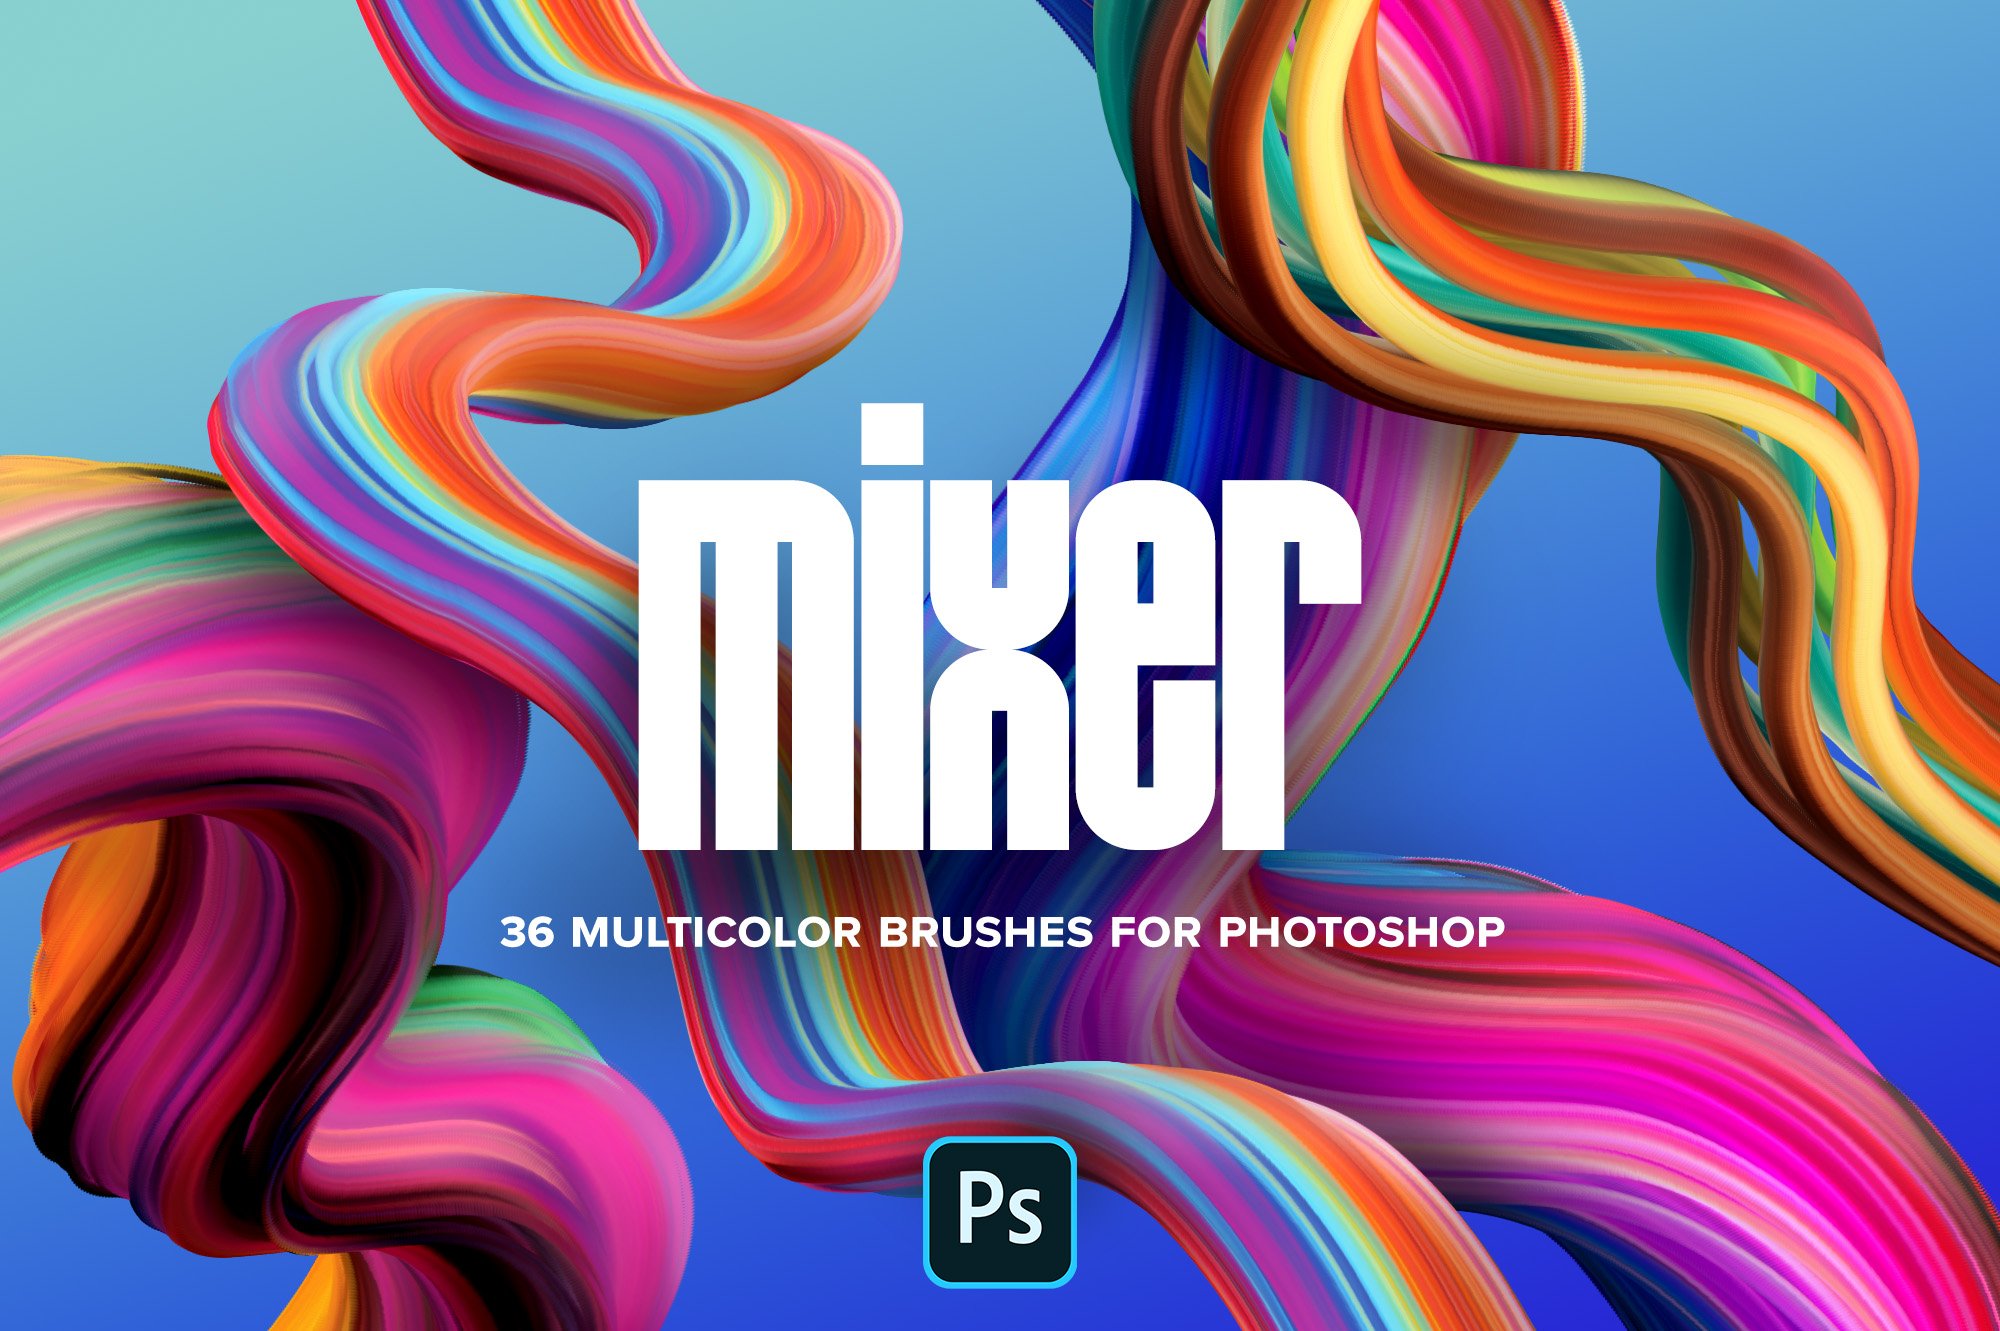 Mixer: Multicolor Photoshop Brushescover image.